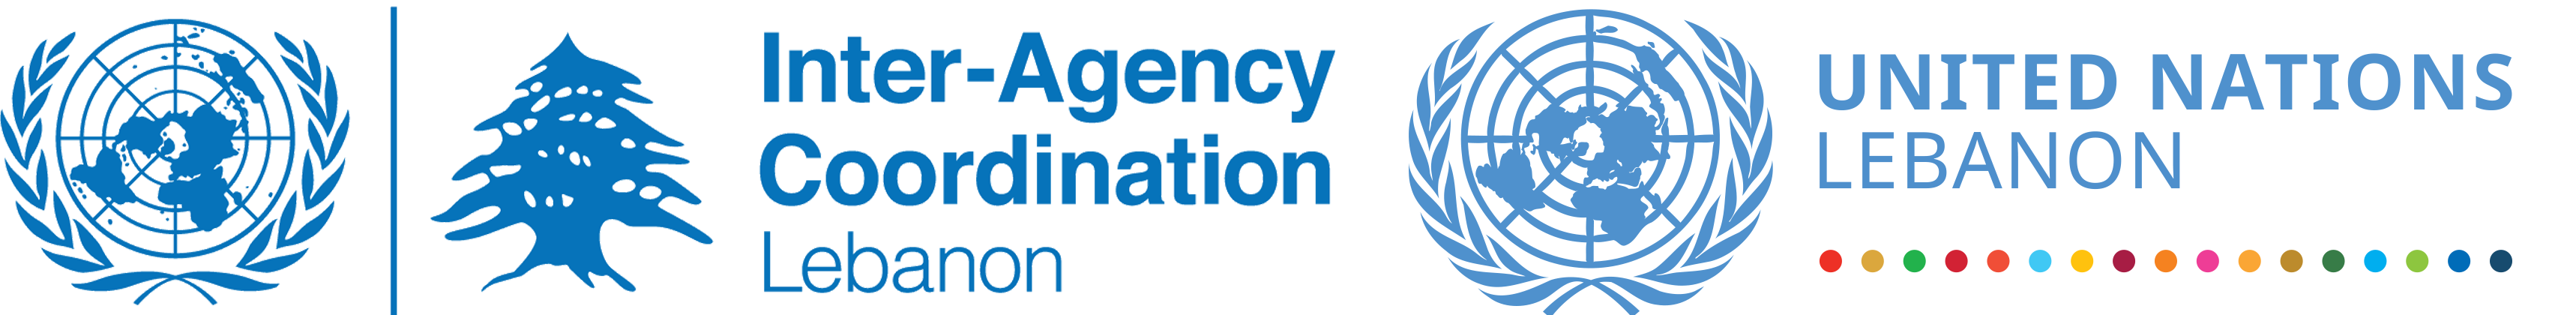 Inter-Agency Logo